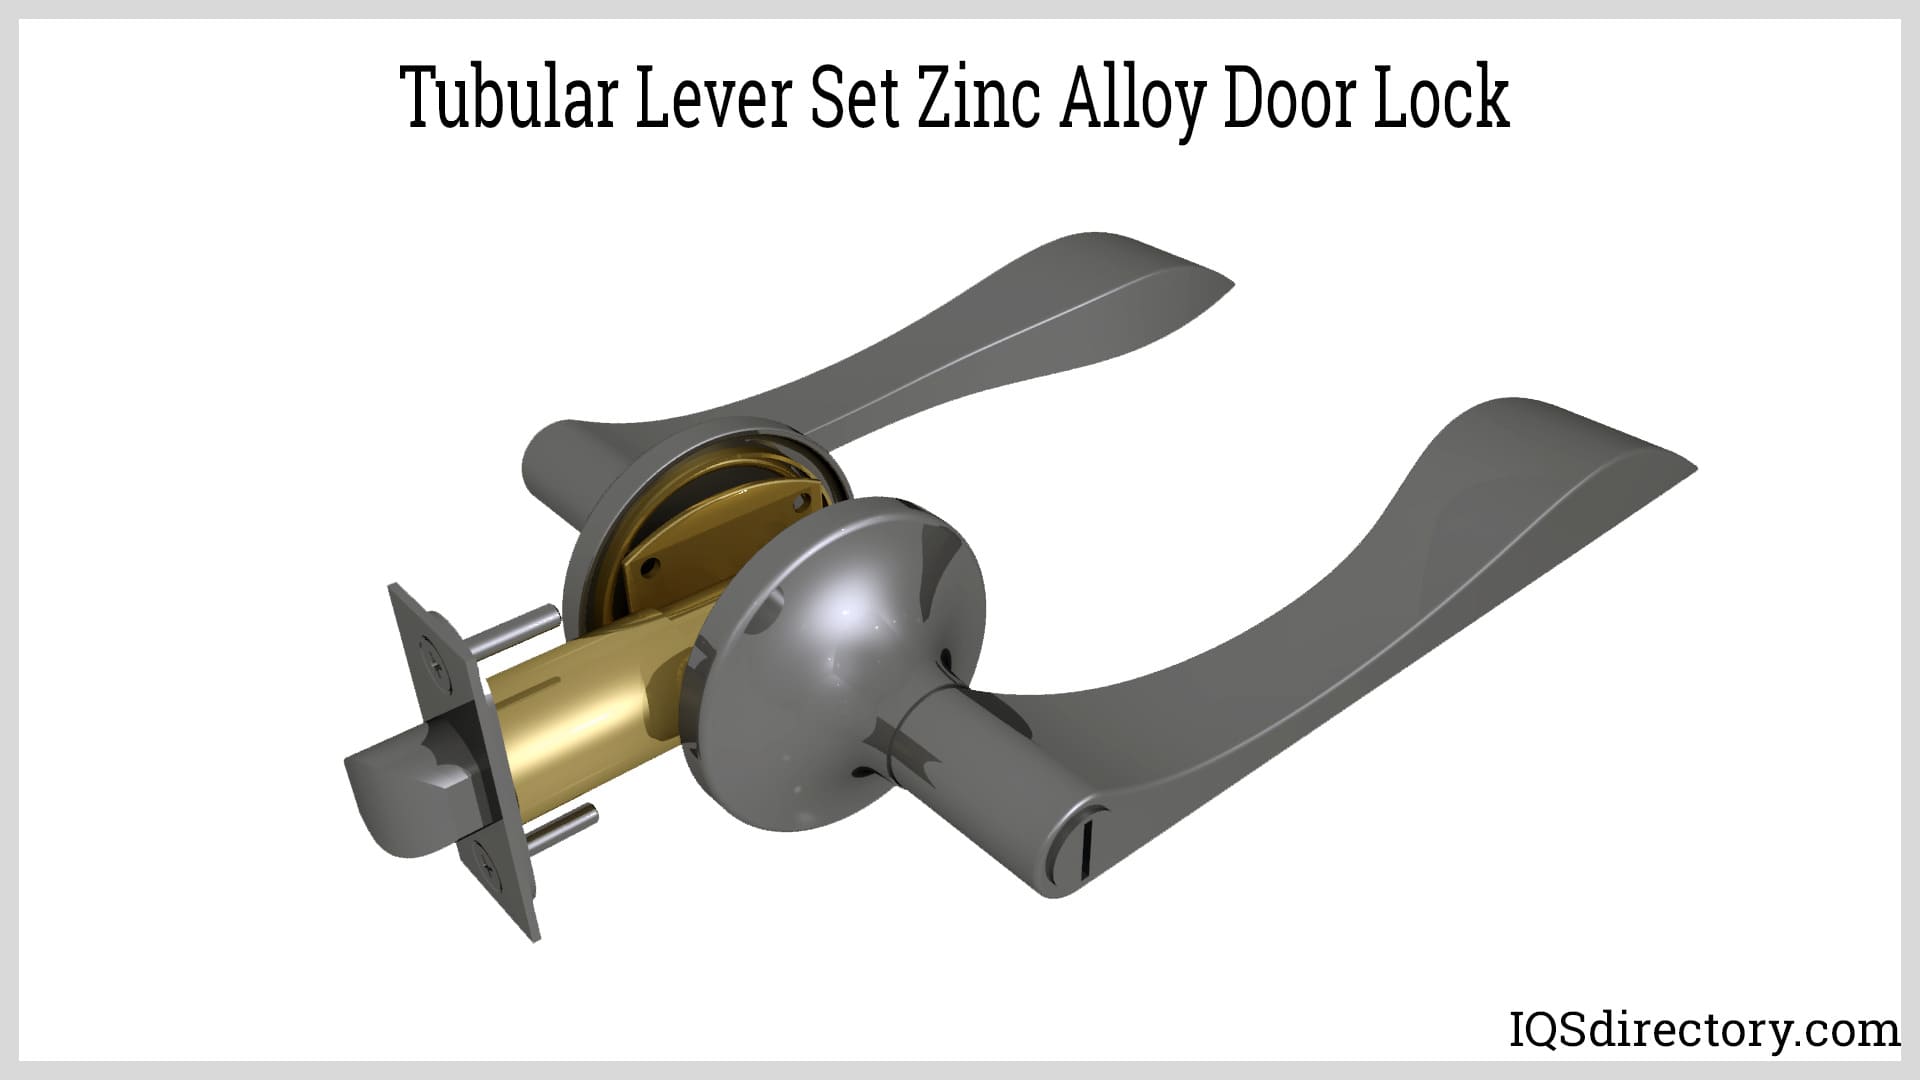 Tubular Lever Set Zinc Alloy Door Lock